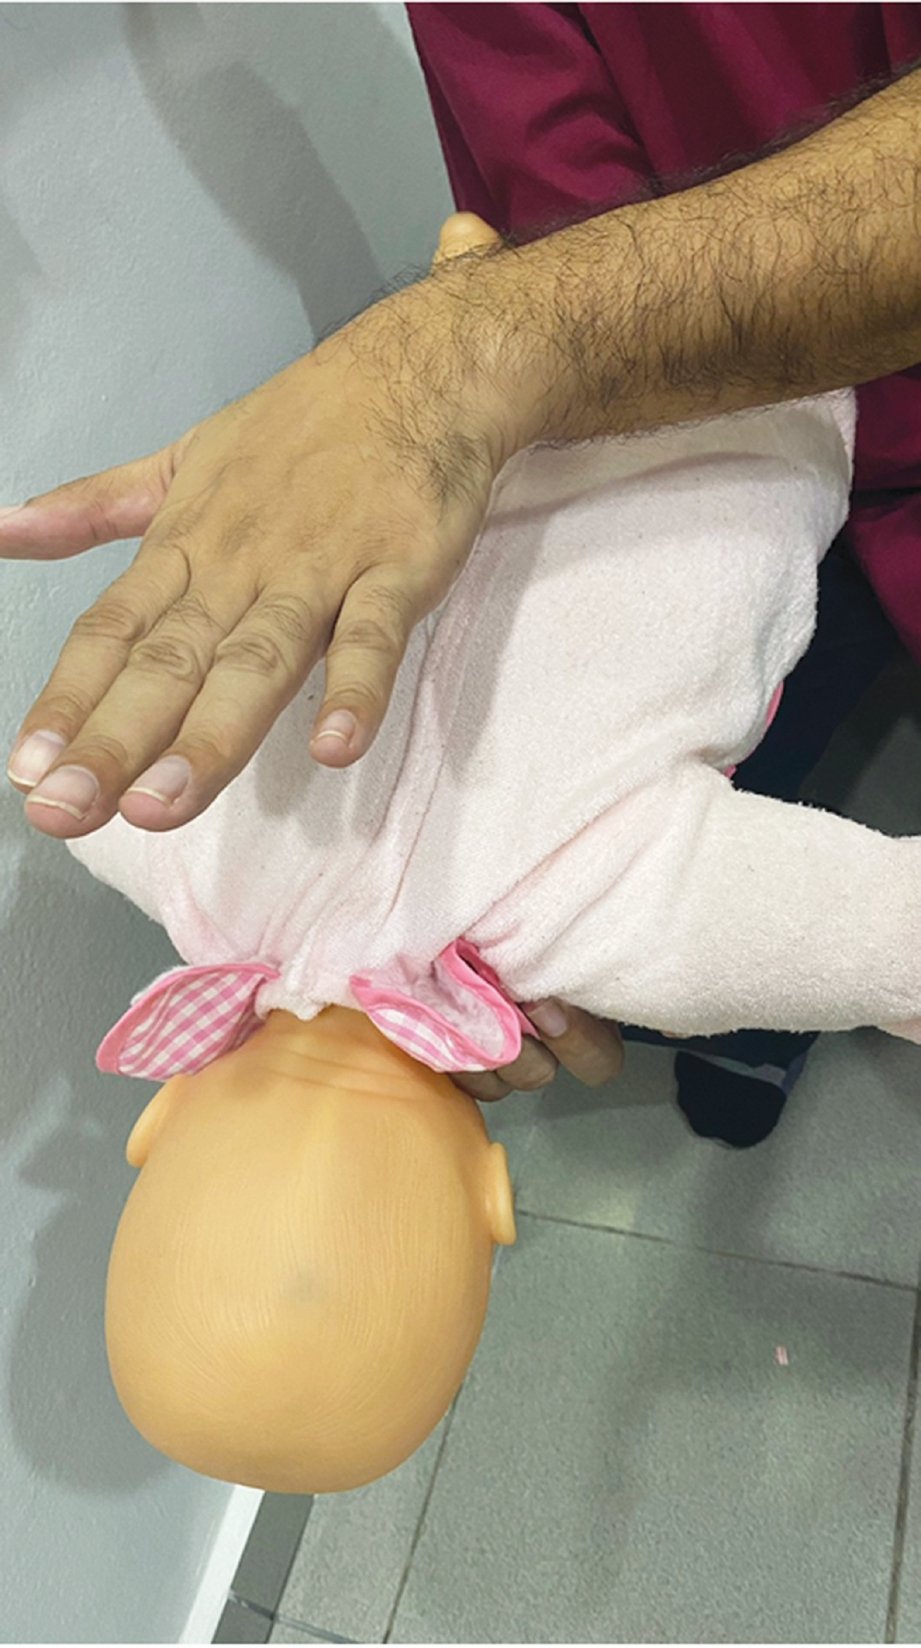 MENEPUK belakang bayi sebanyak lima kali bagi mengeluarkan benda asing.